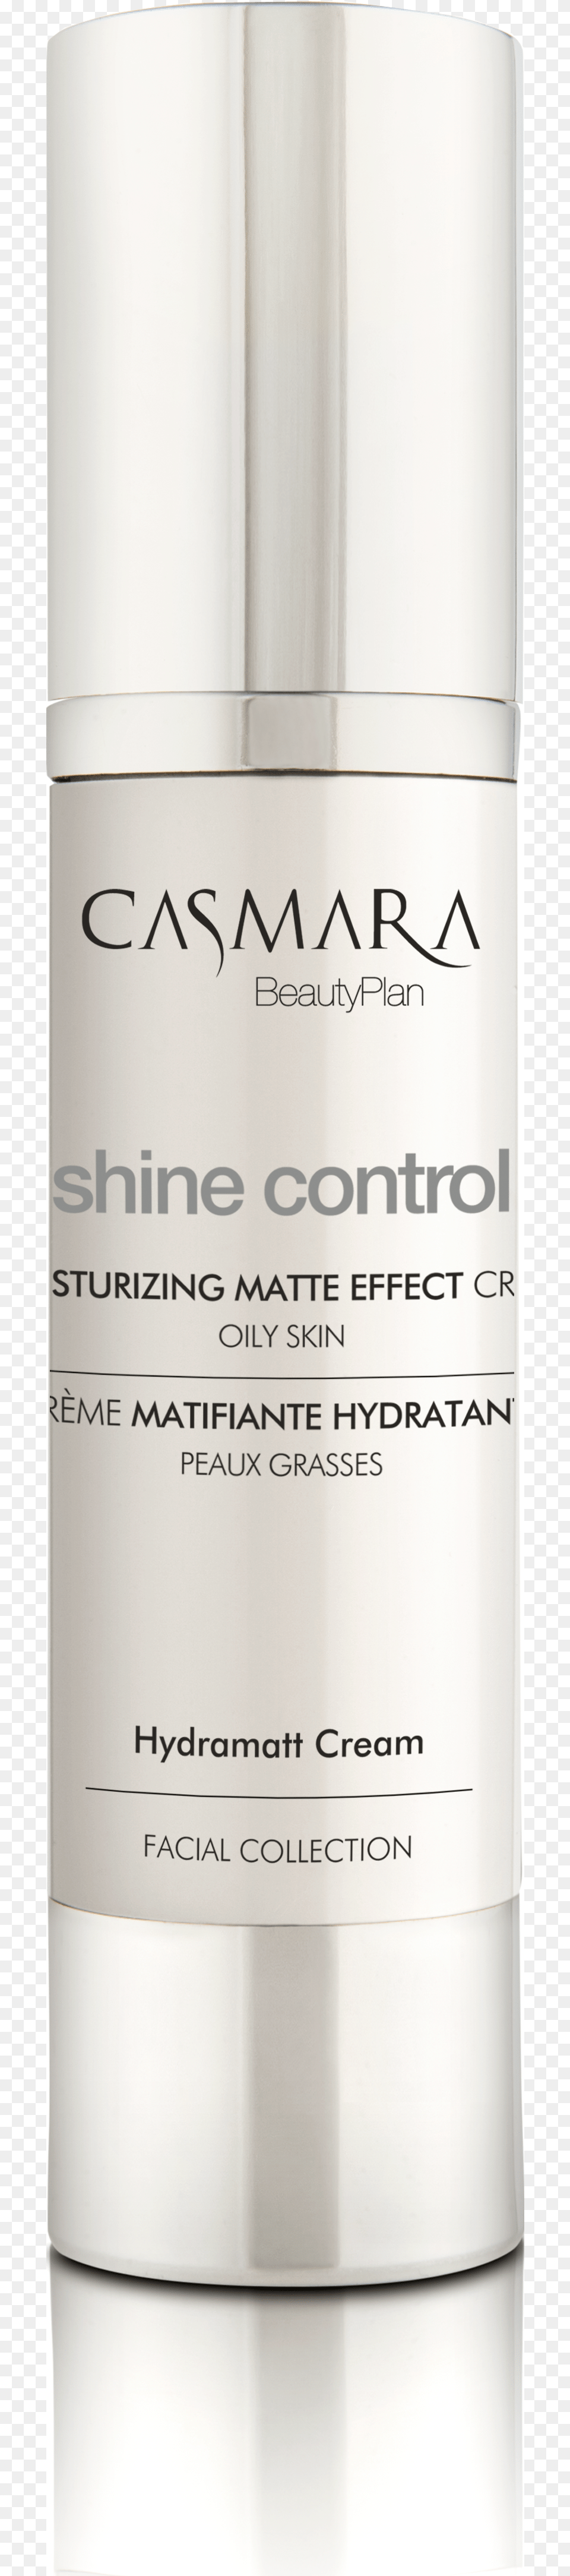 Moisturizing Matte Effect Cream Casmara, Cosmetics, Bottle Png